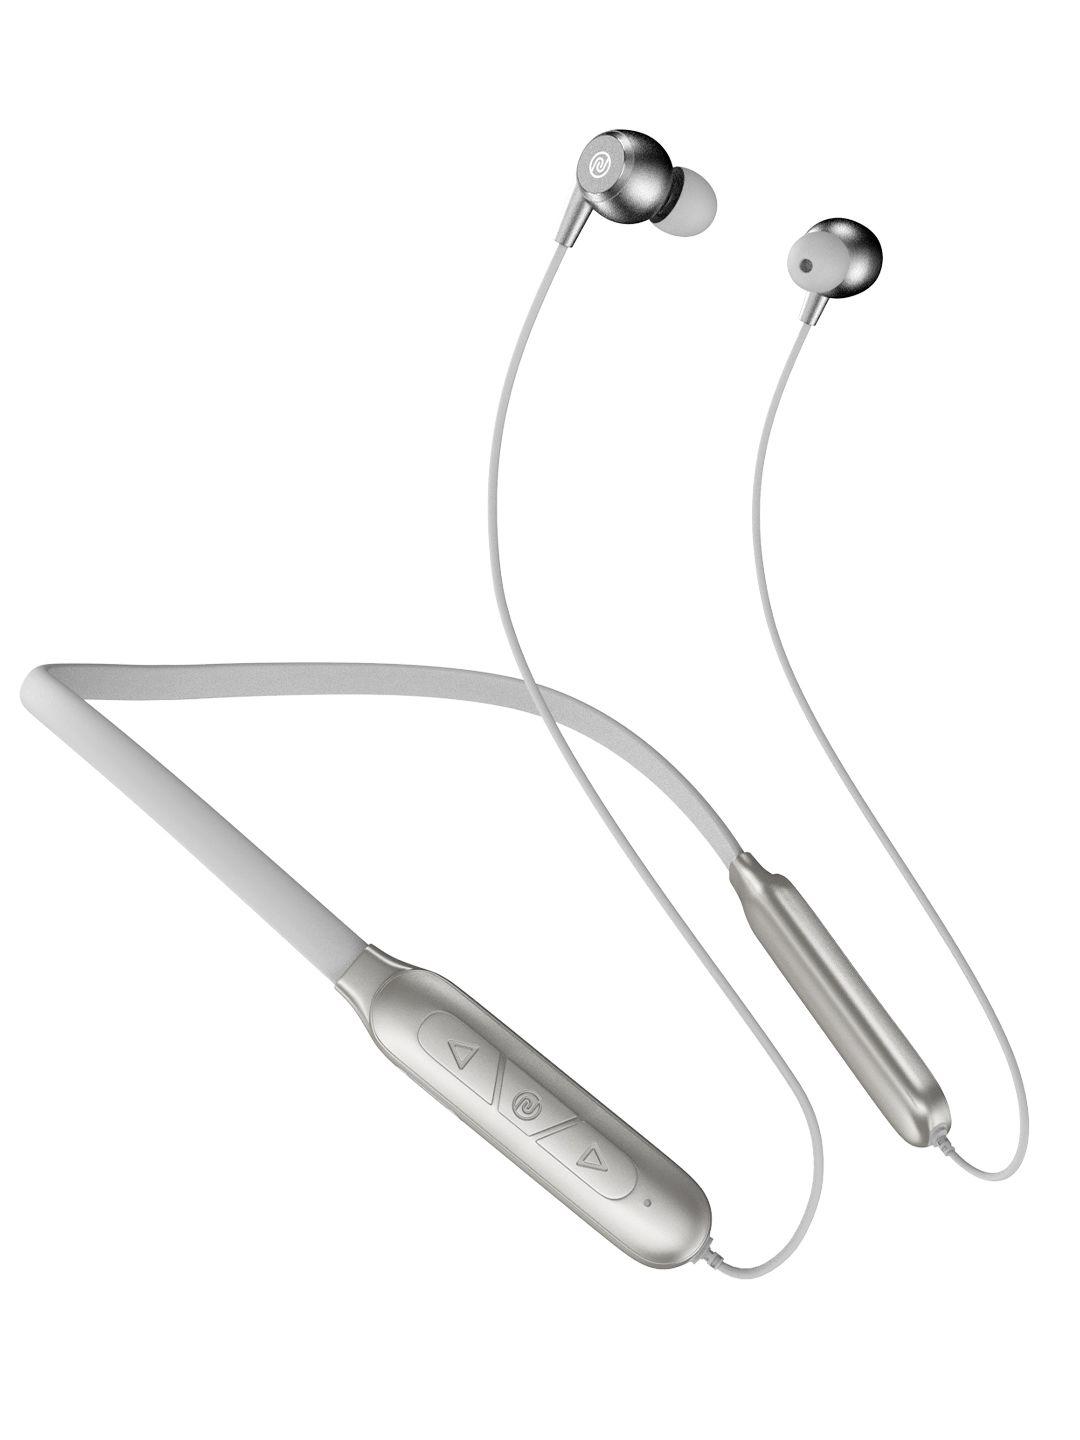 NOISE Nerve Bluetooth Wireless Neckband Earphones with Mic - Mist Grey